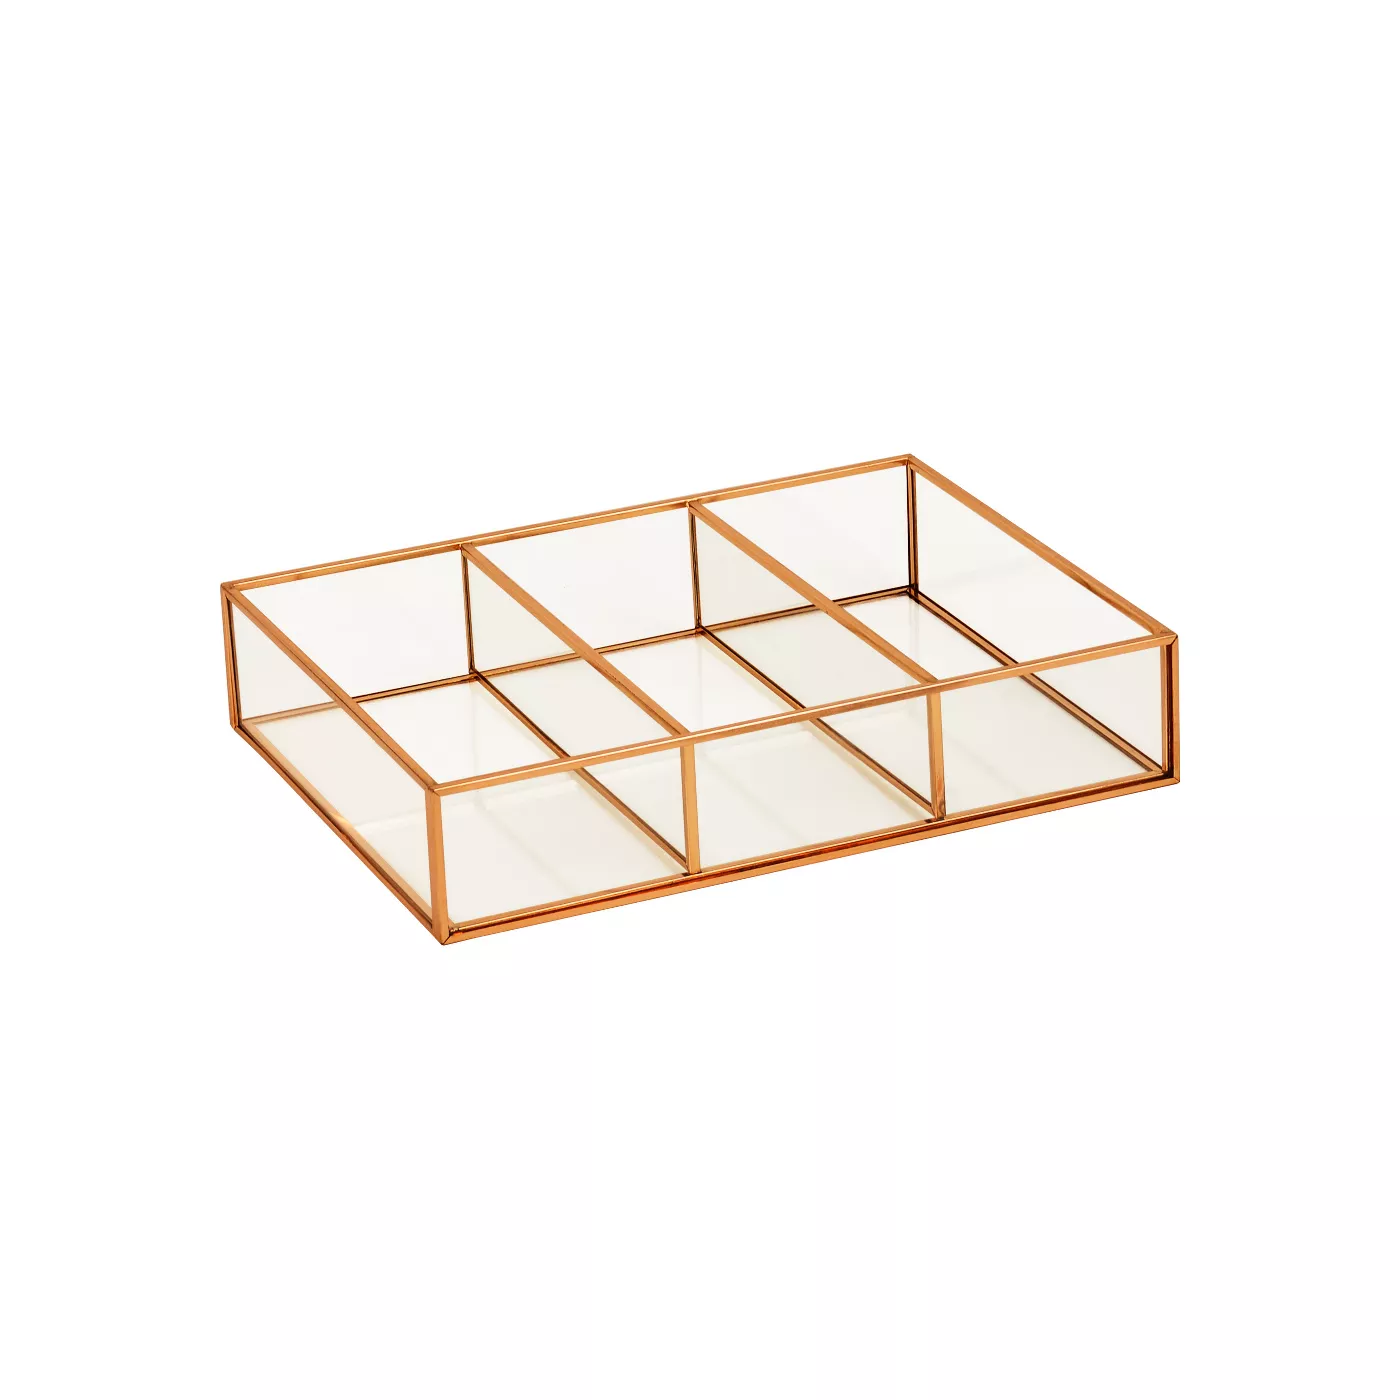 3 Compartment Horizontal Glass & Metal Vanity Organizer Copper Finish 10"X7.5"X2" - Threshold™ - image 1 of 1